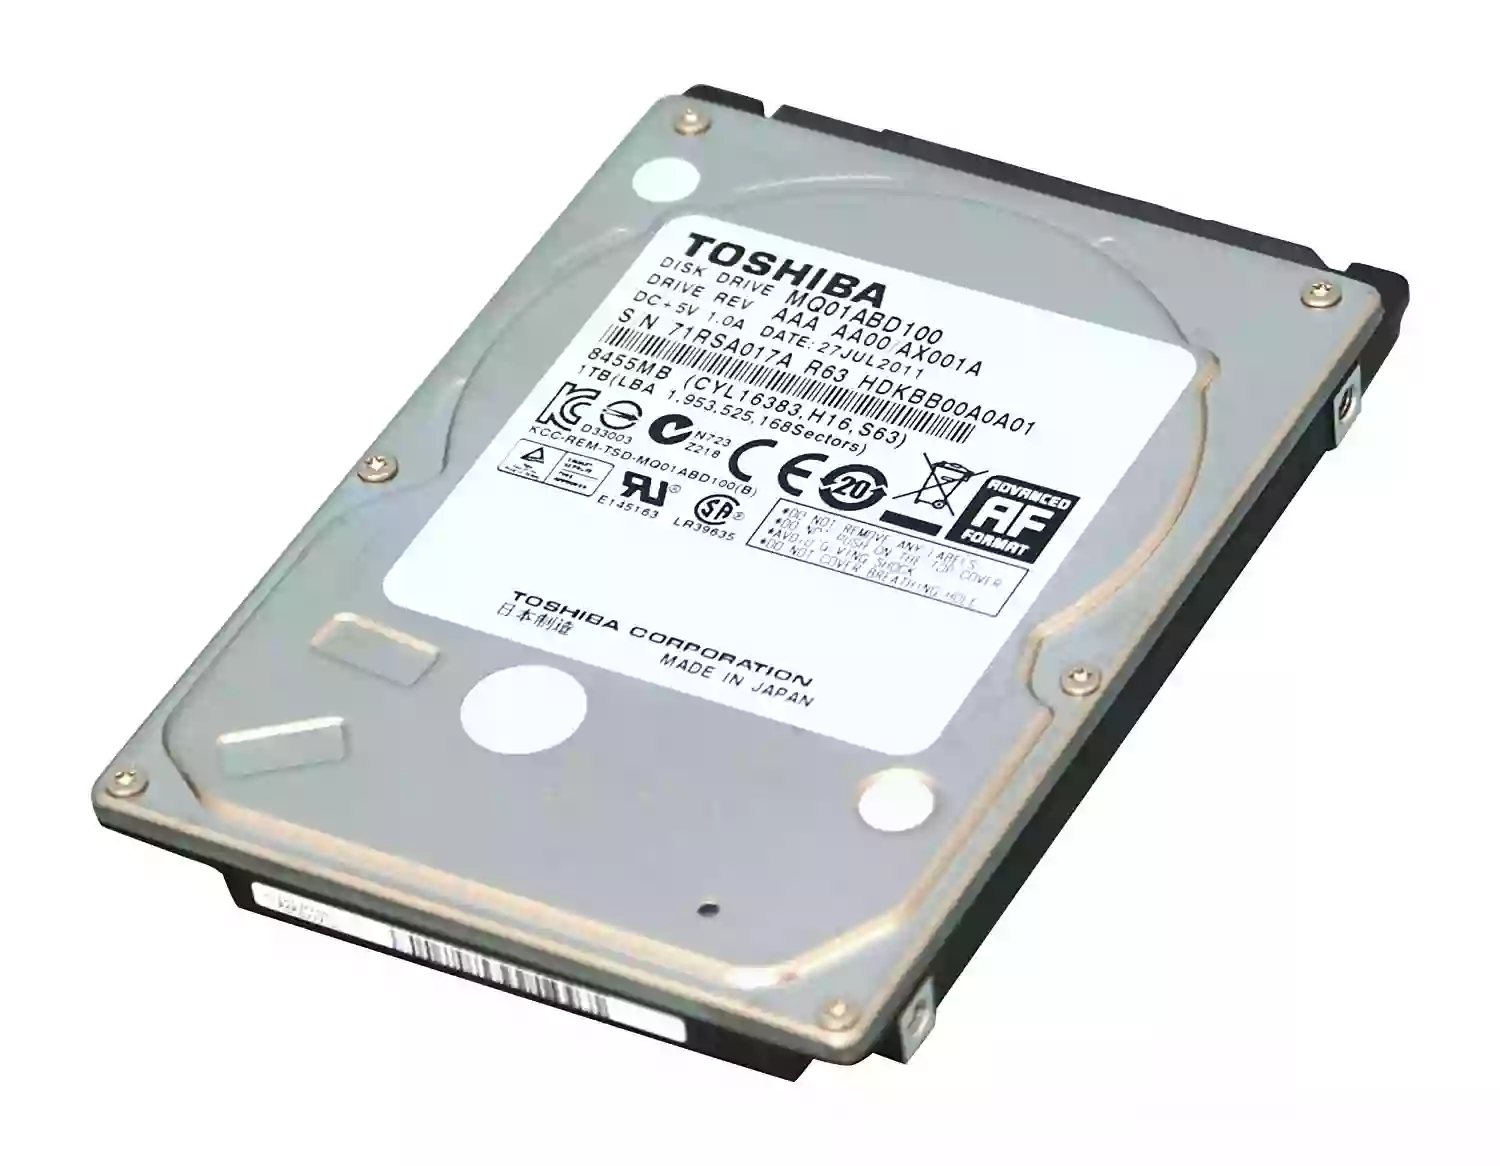 1TB internal Laptop Hard drive {brand new}